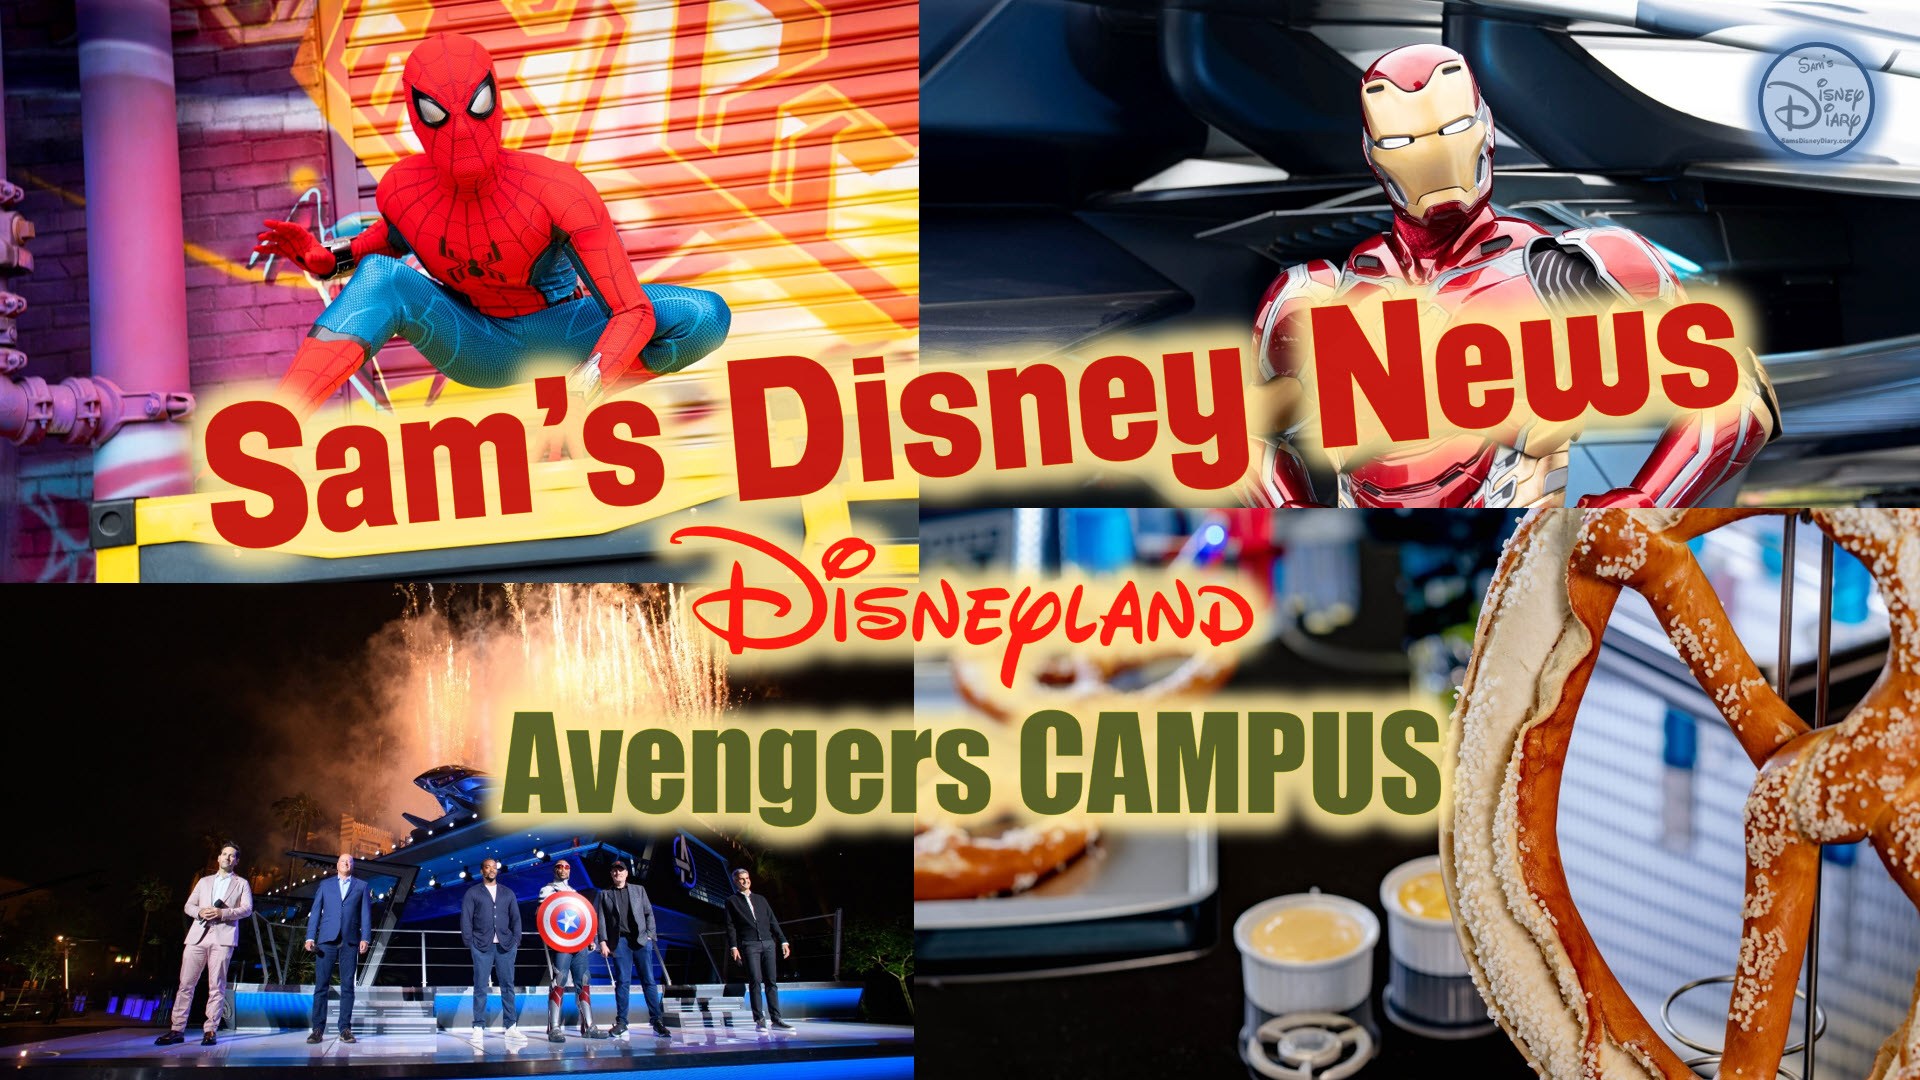 Avengers Campus Opening Day | Disney California Adventure Park | Disney News | Sam's Disney Diary